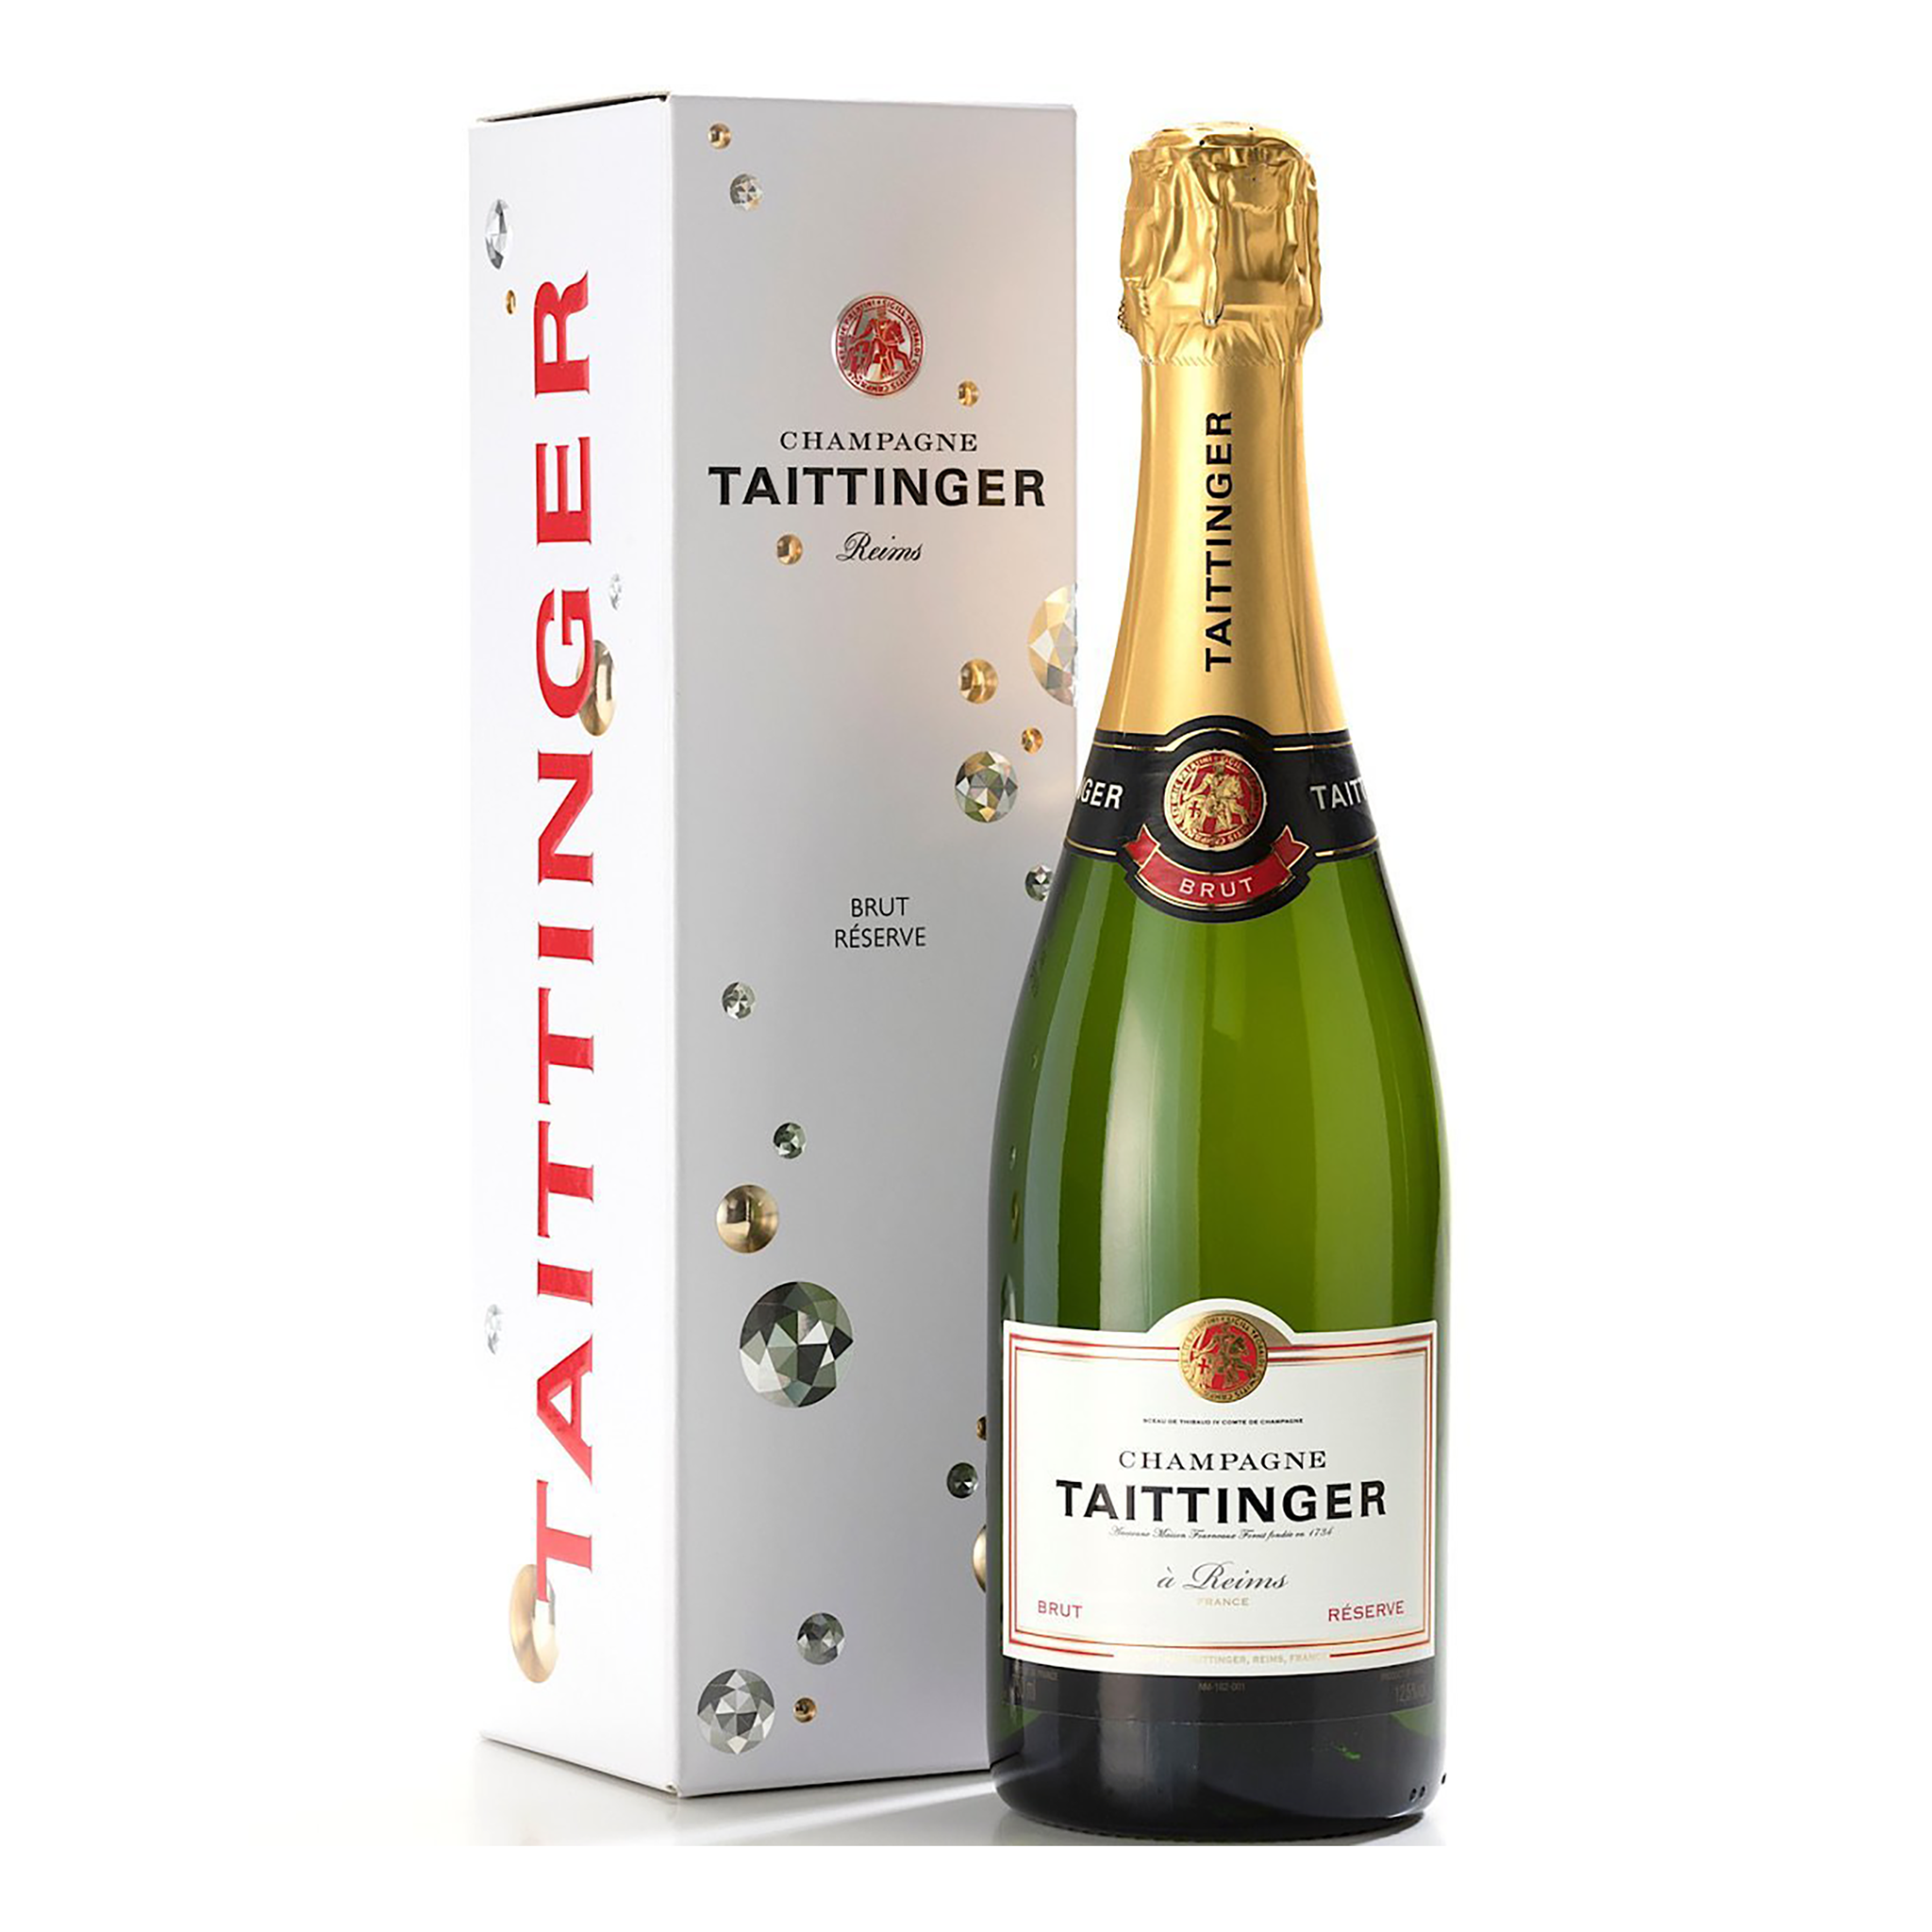 Buy Taittinger : Cuvée Prestige Brut Champagne online